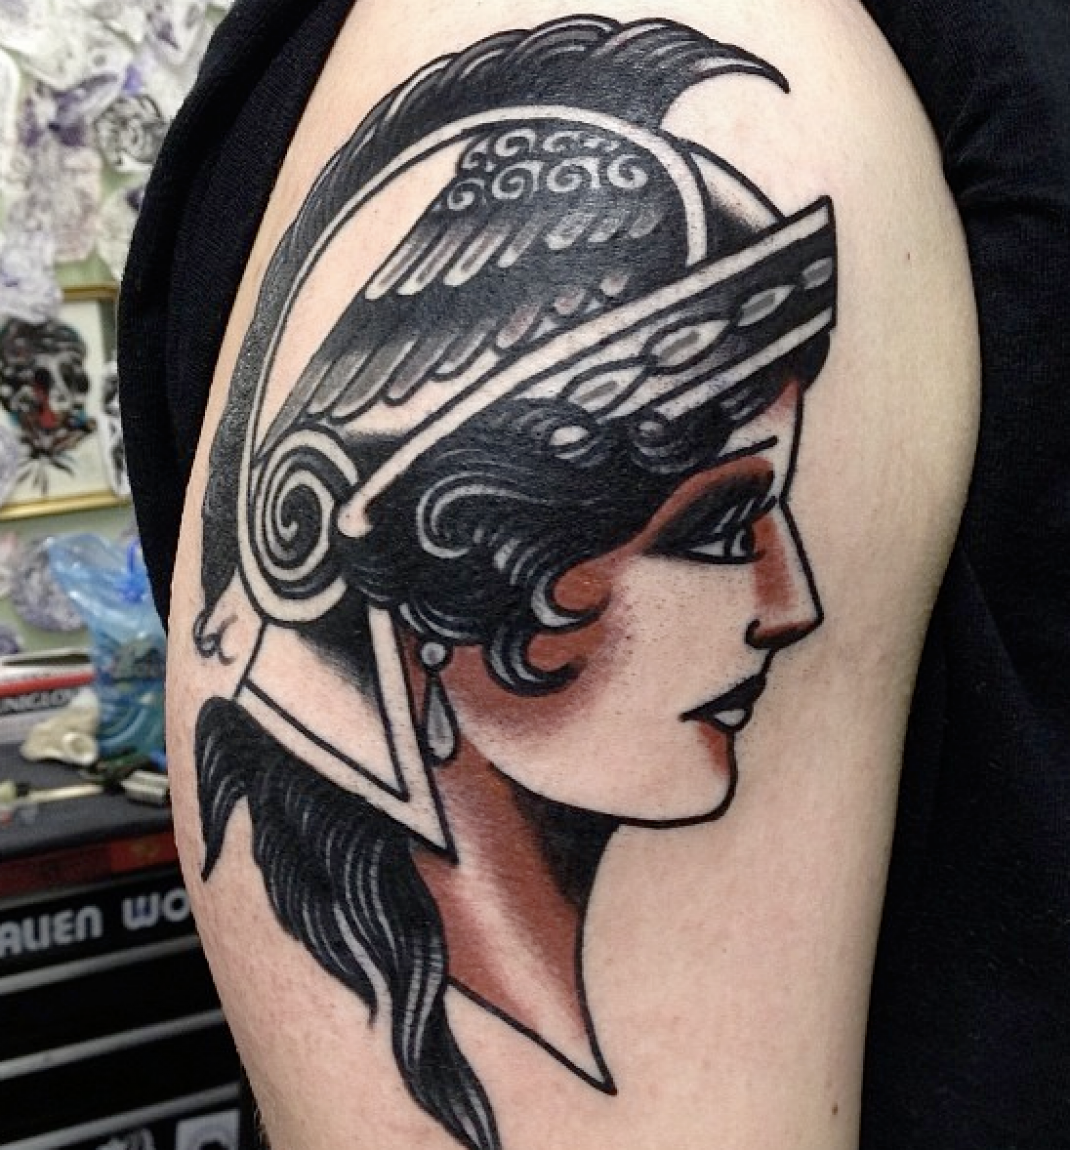 Athena Tattoo Design on Hand For Girl.